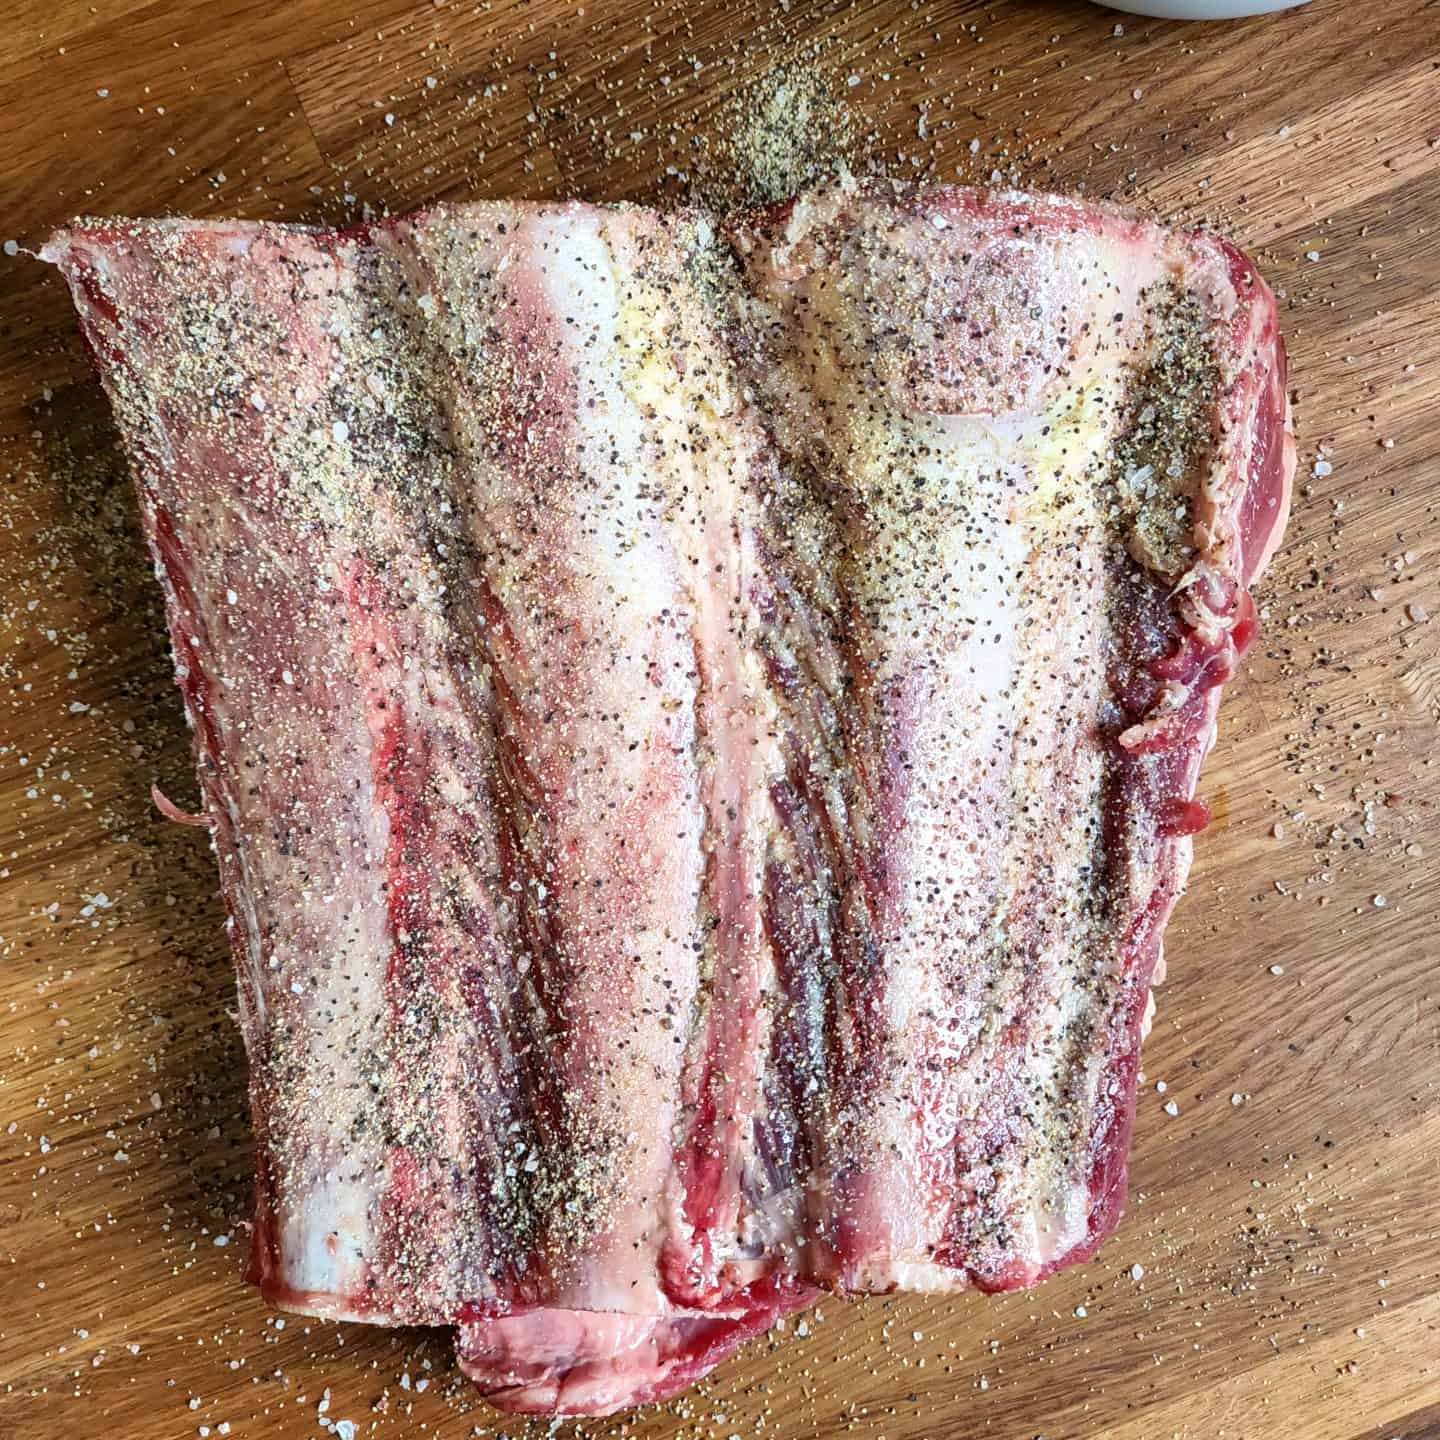 Season beef plate ribs with kosher salt, coarse black pepper, and garlic powder.